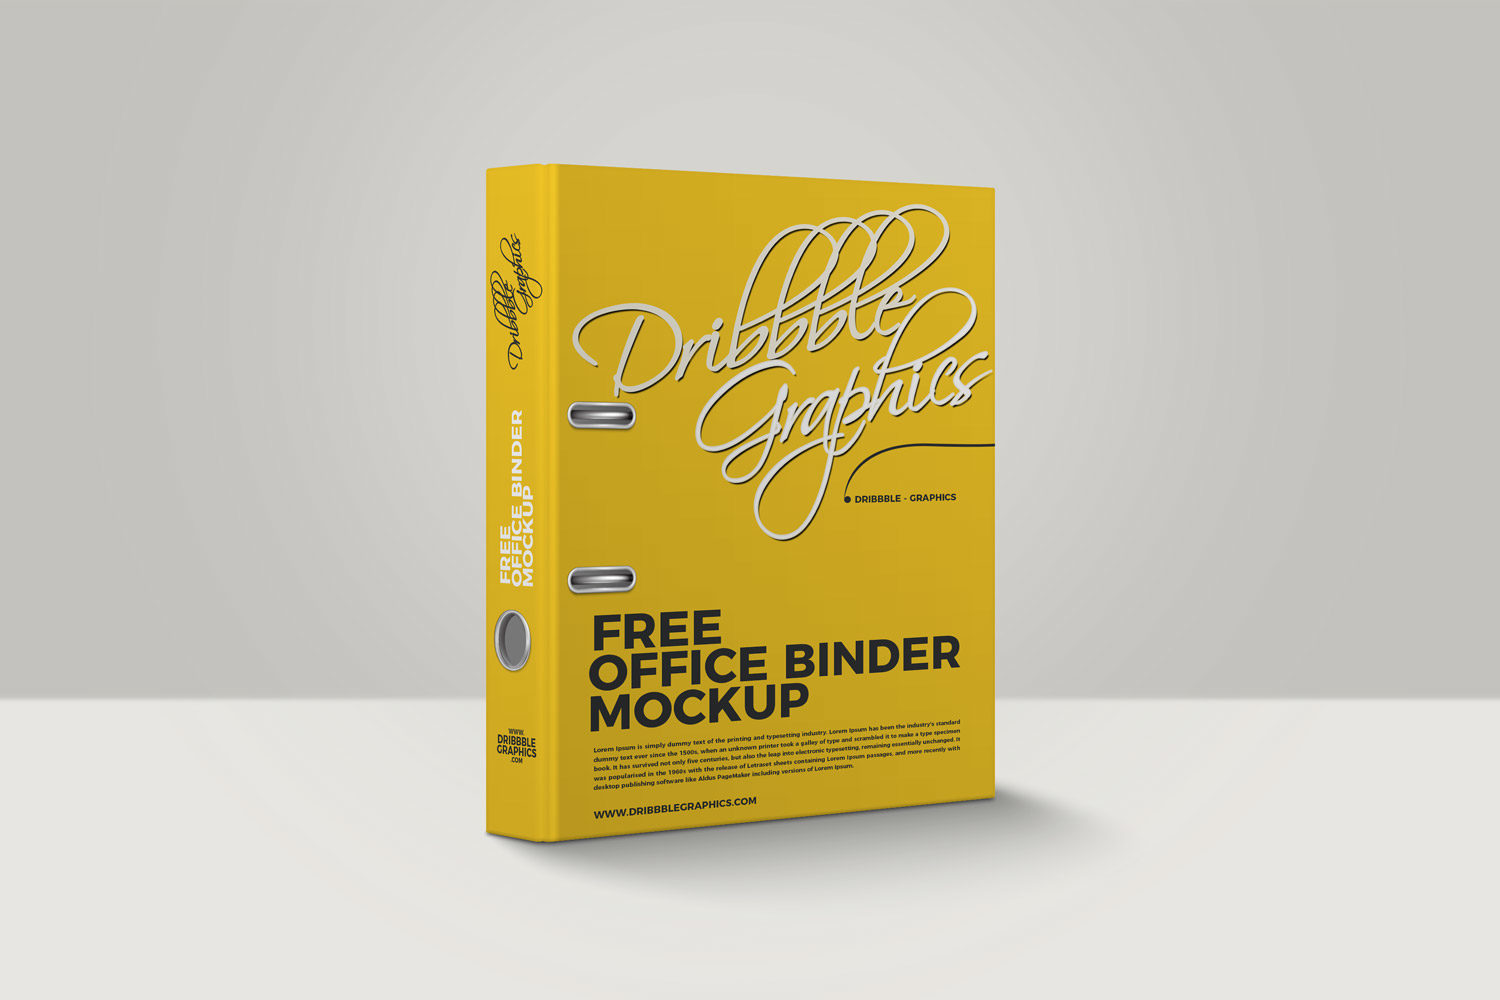 Download Free Office Binder Mockup | Free Mockup